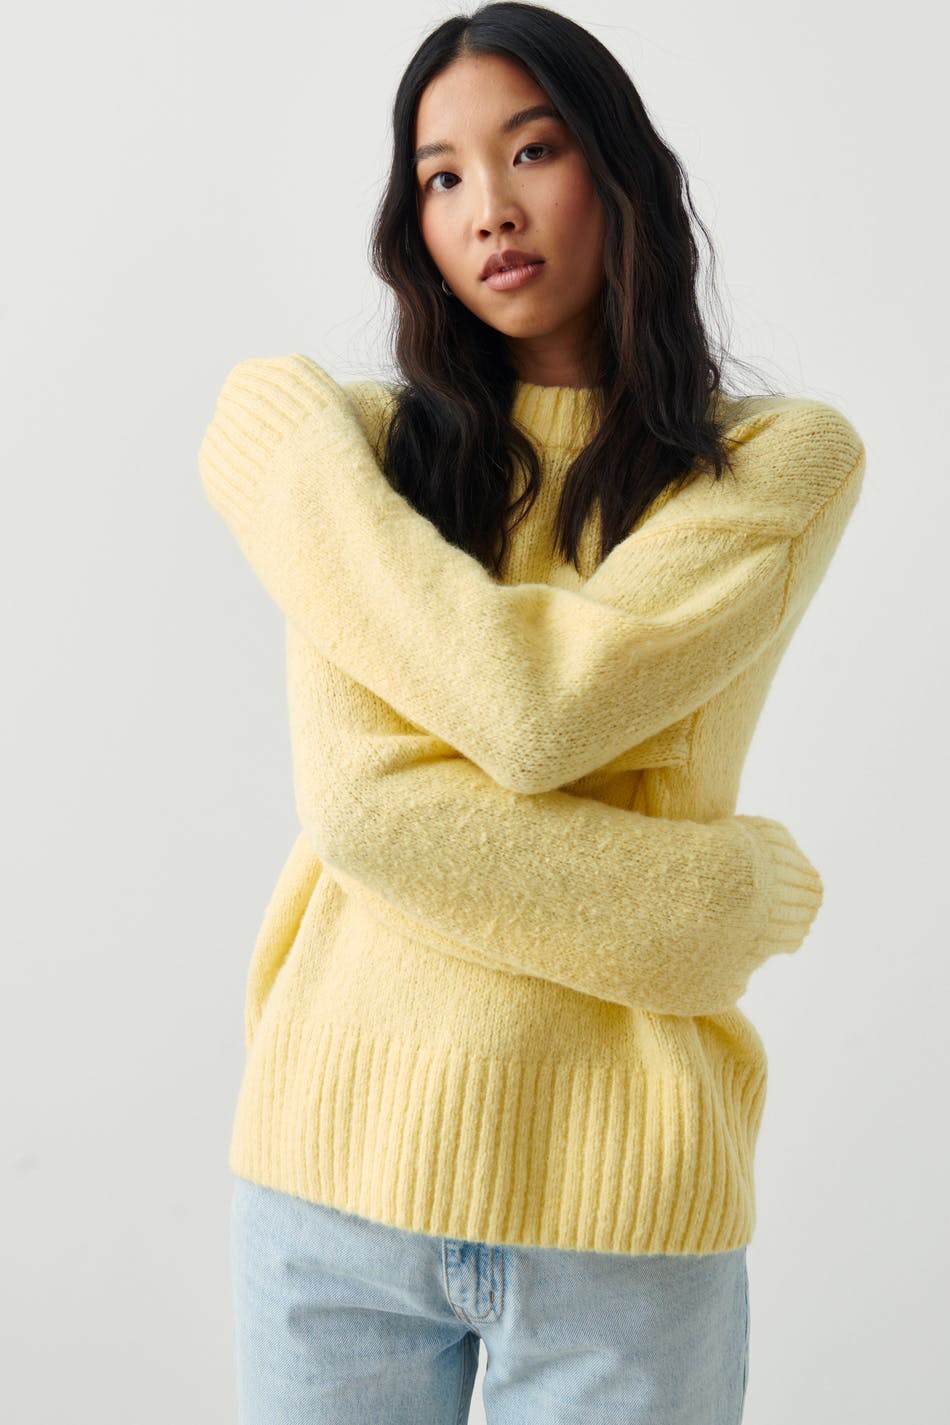 Charlie sweater - Gina Tricot